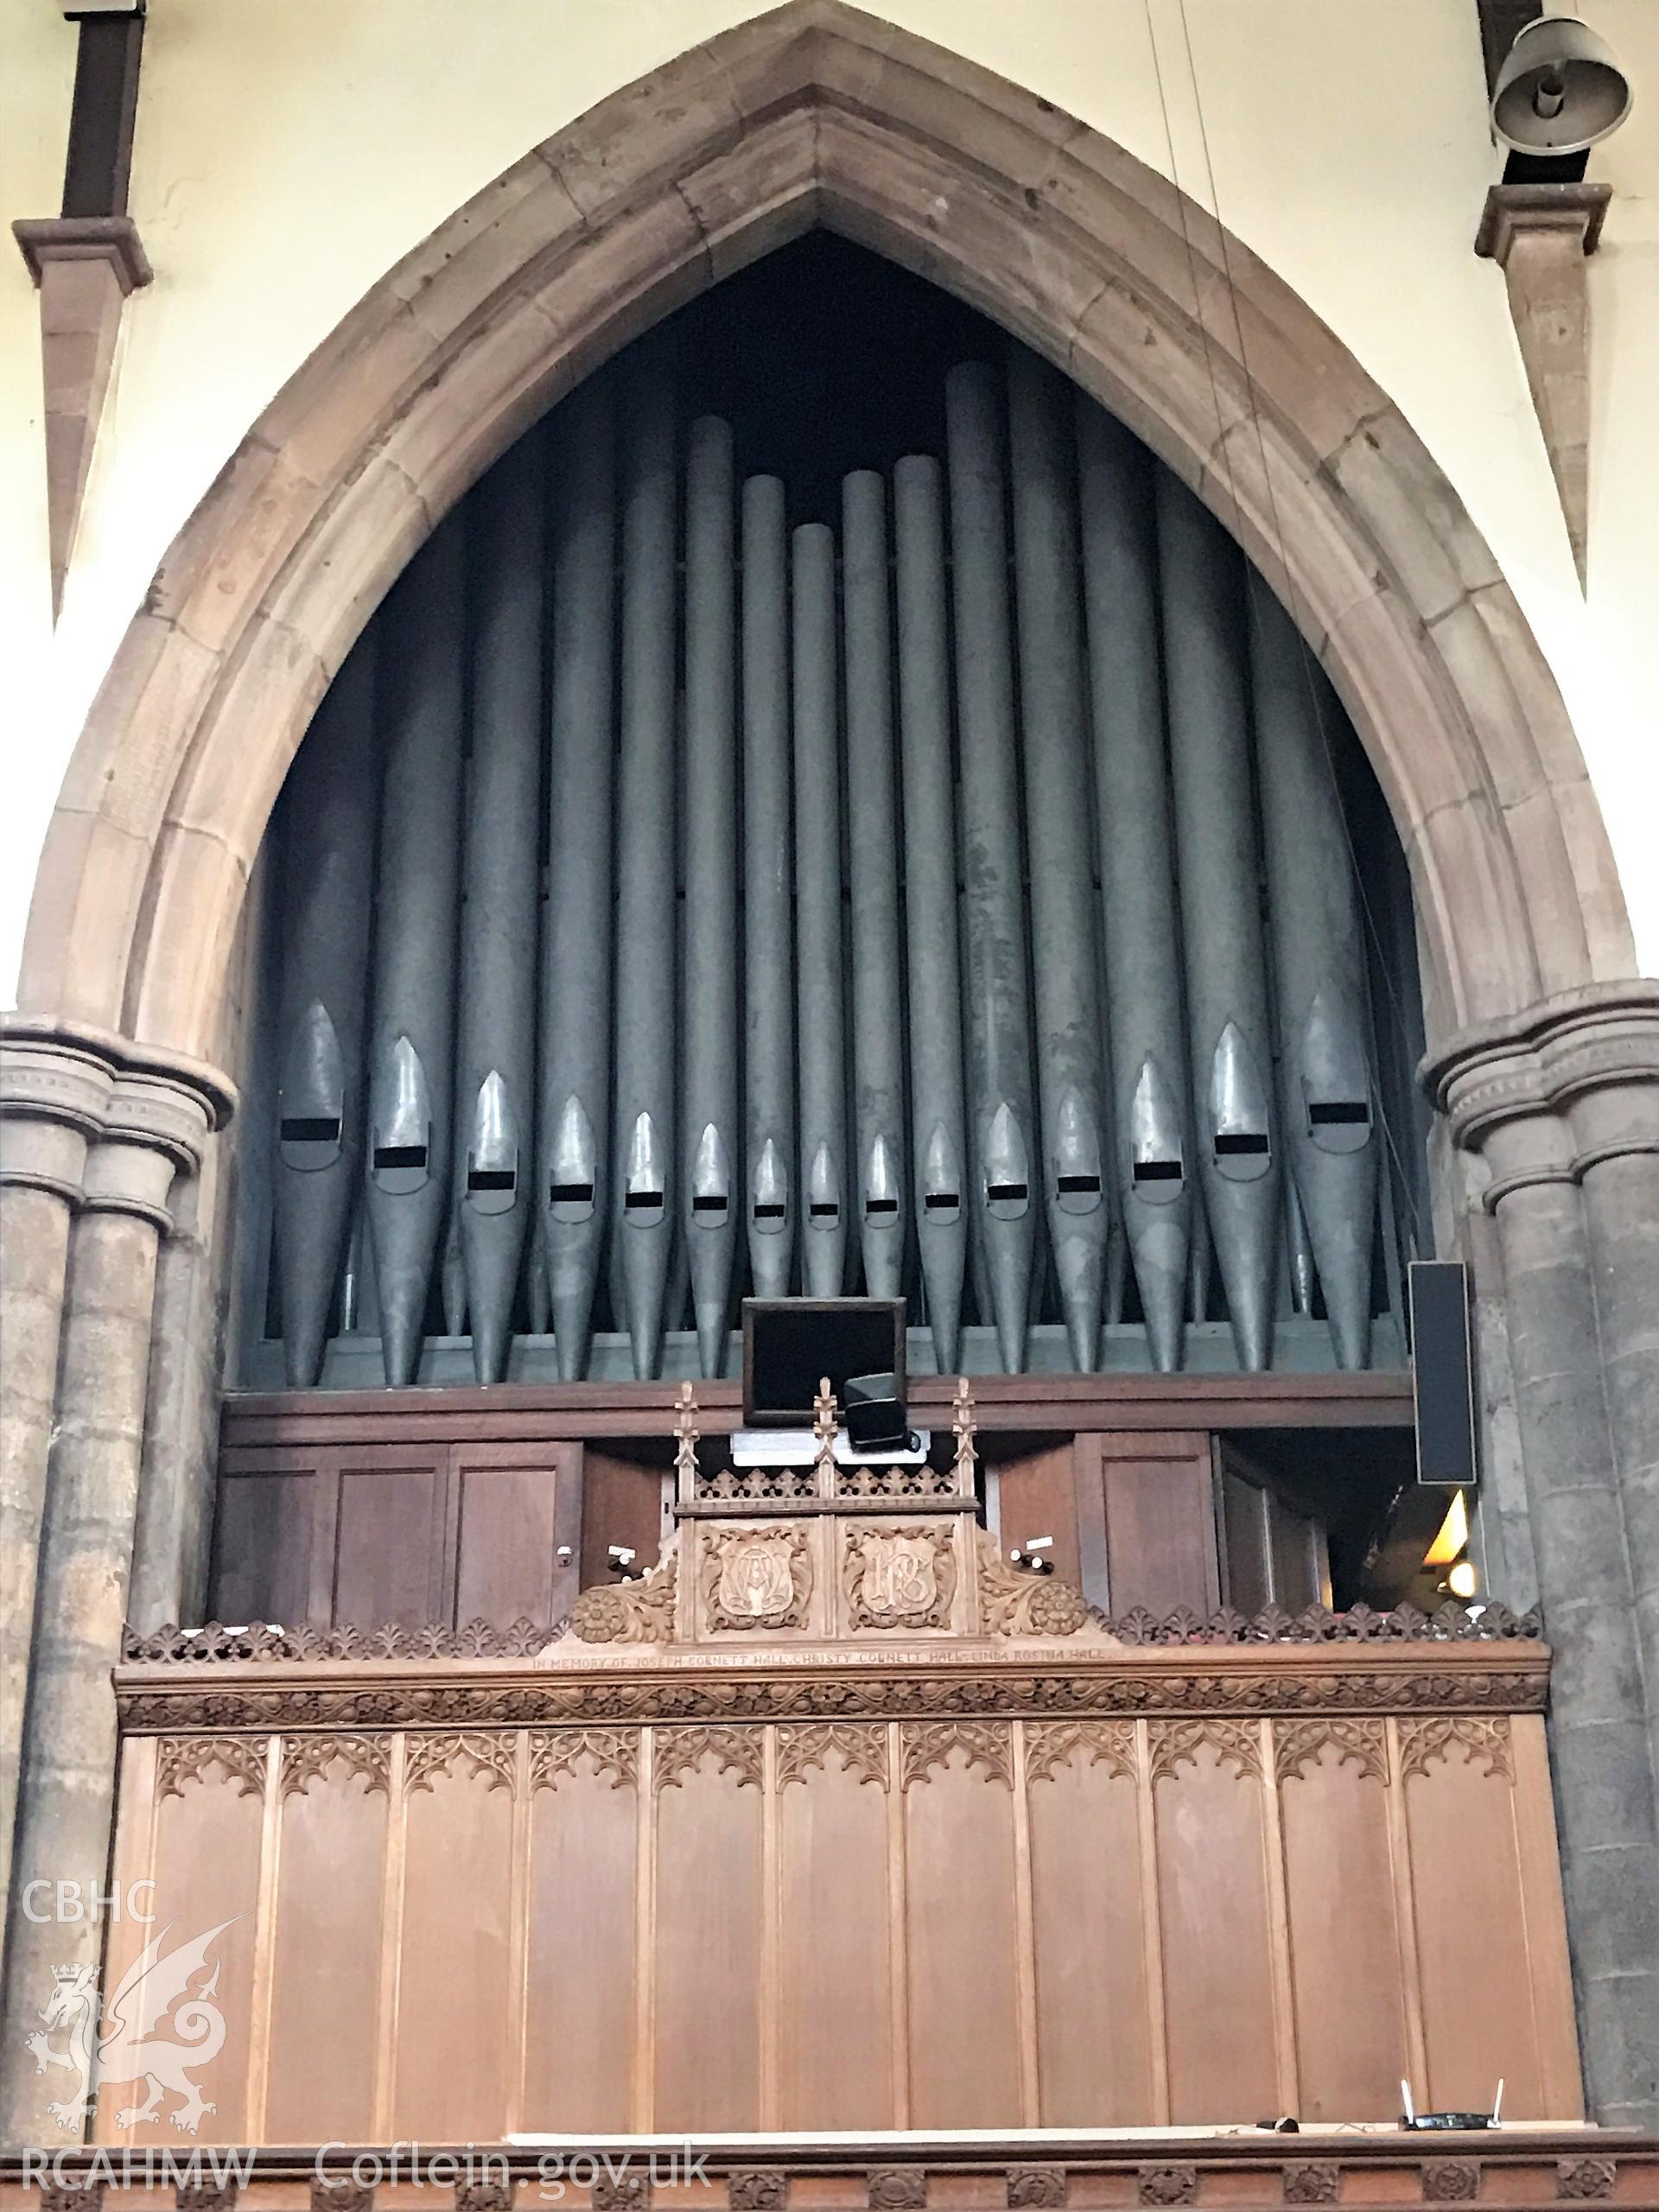 Colour photo showing the organ at St Paul's Church, Grangetown, taken by Revd David T. Morris, 2018.